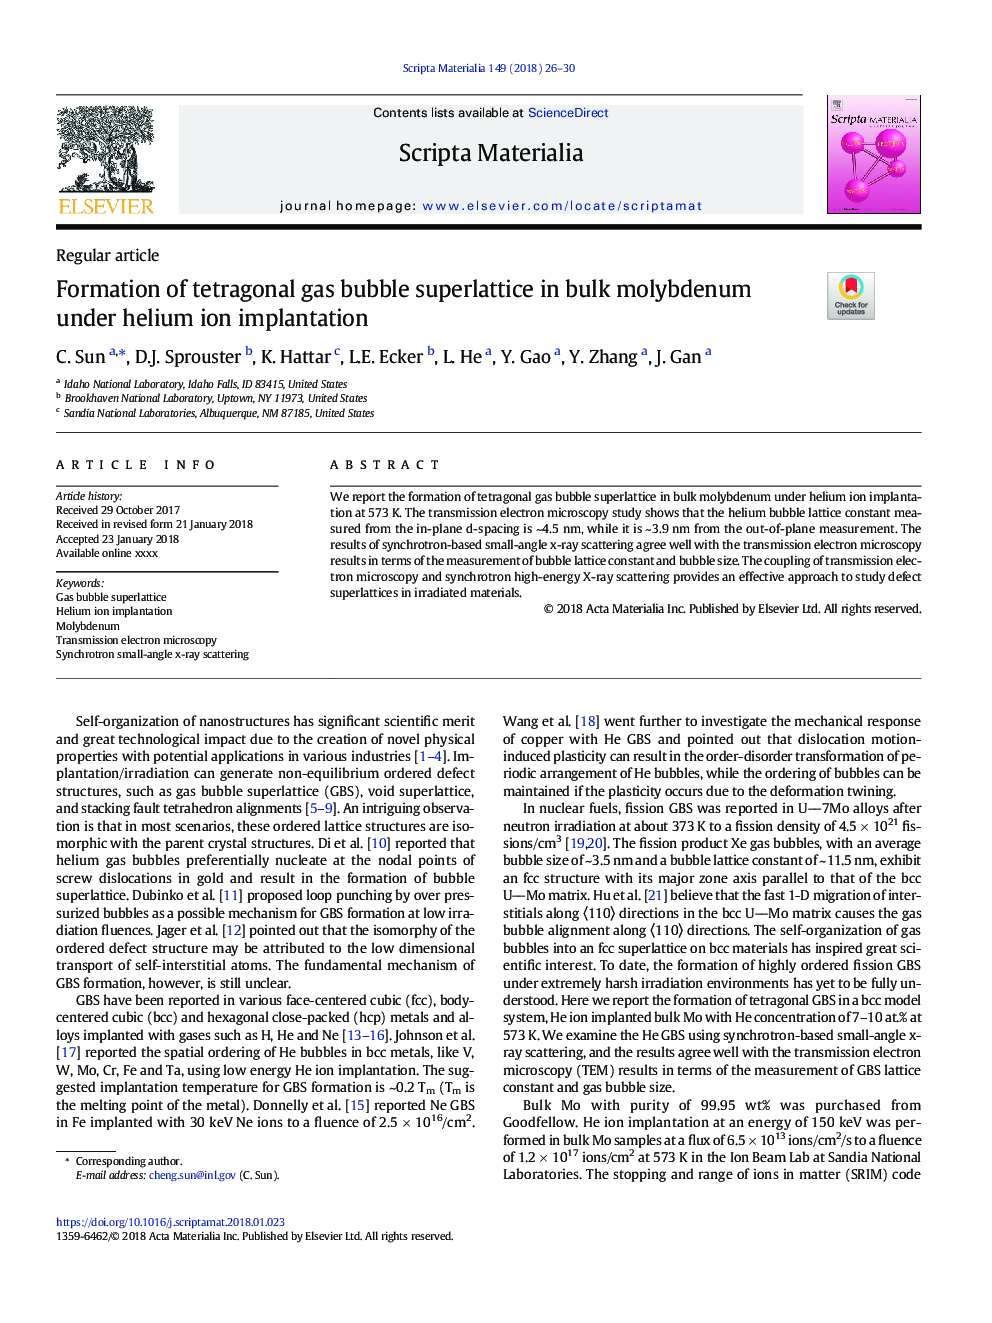 Formation of tetragonal gas bubble superlattice in bulk molybdenum under helium ion implantation